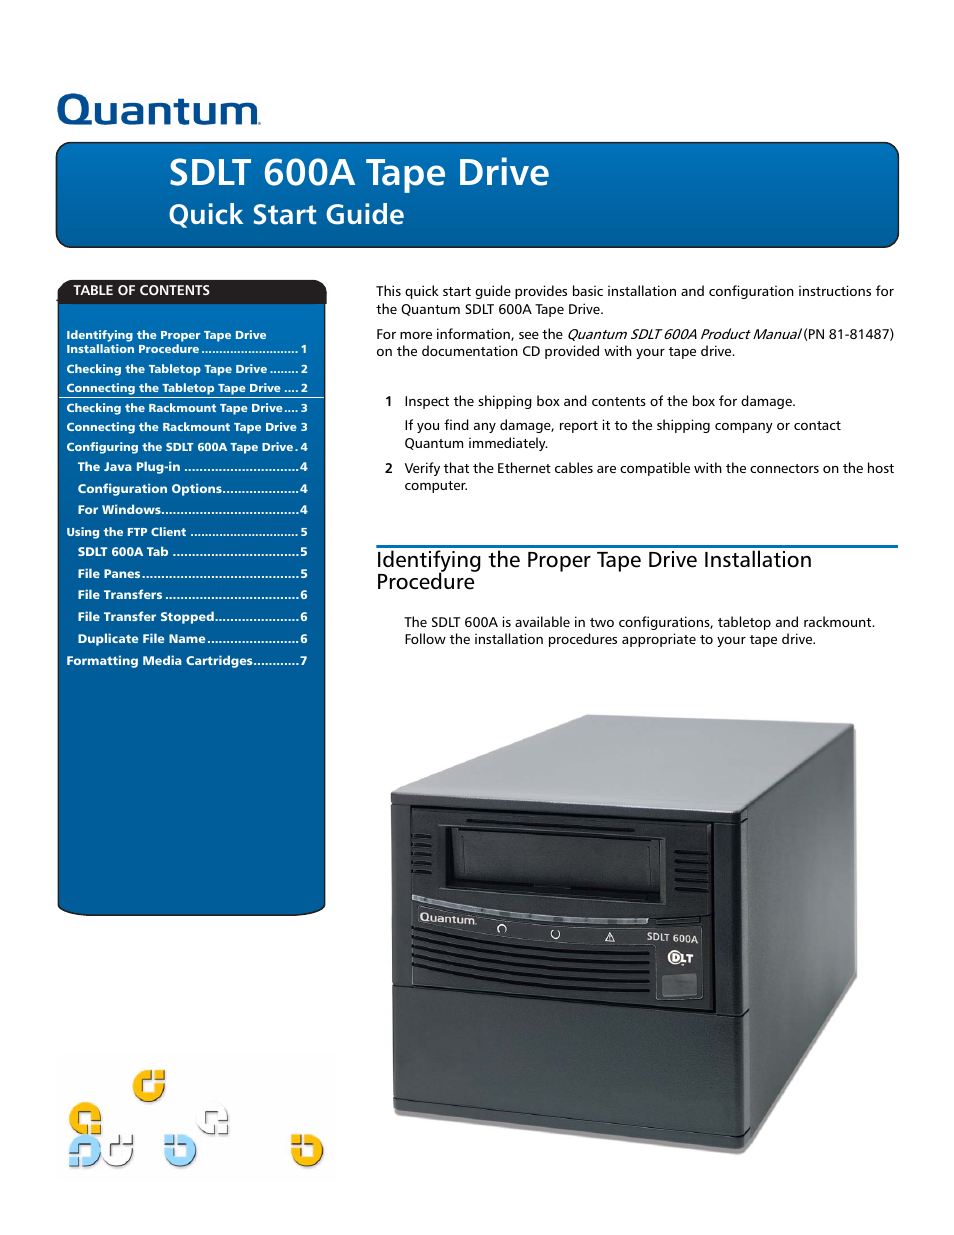 Tape Drive SDLT 600A